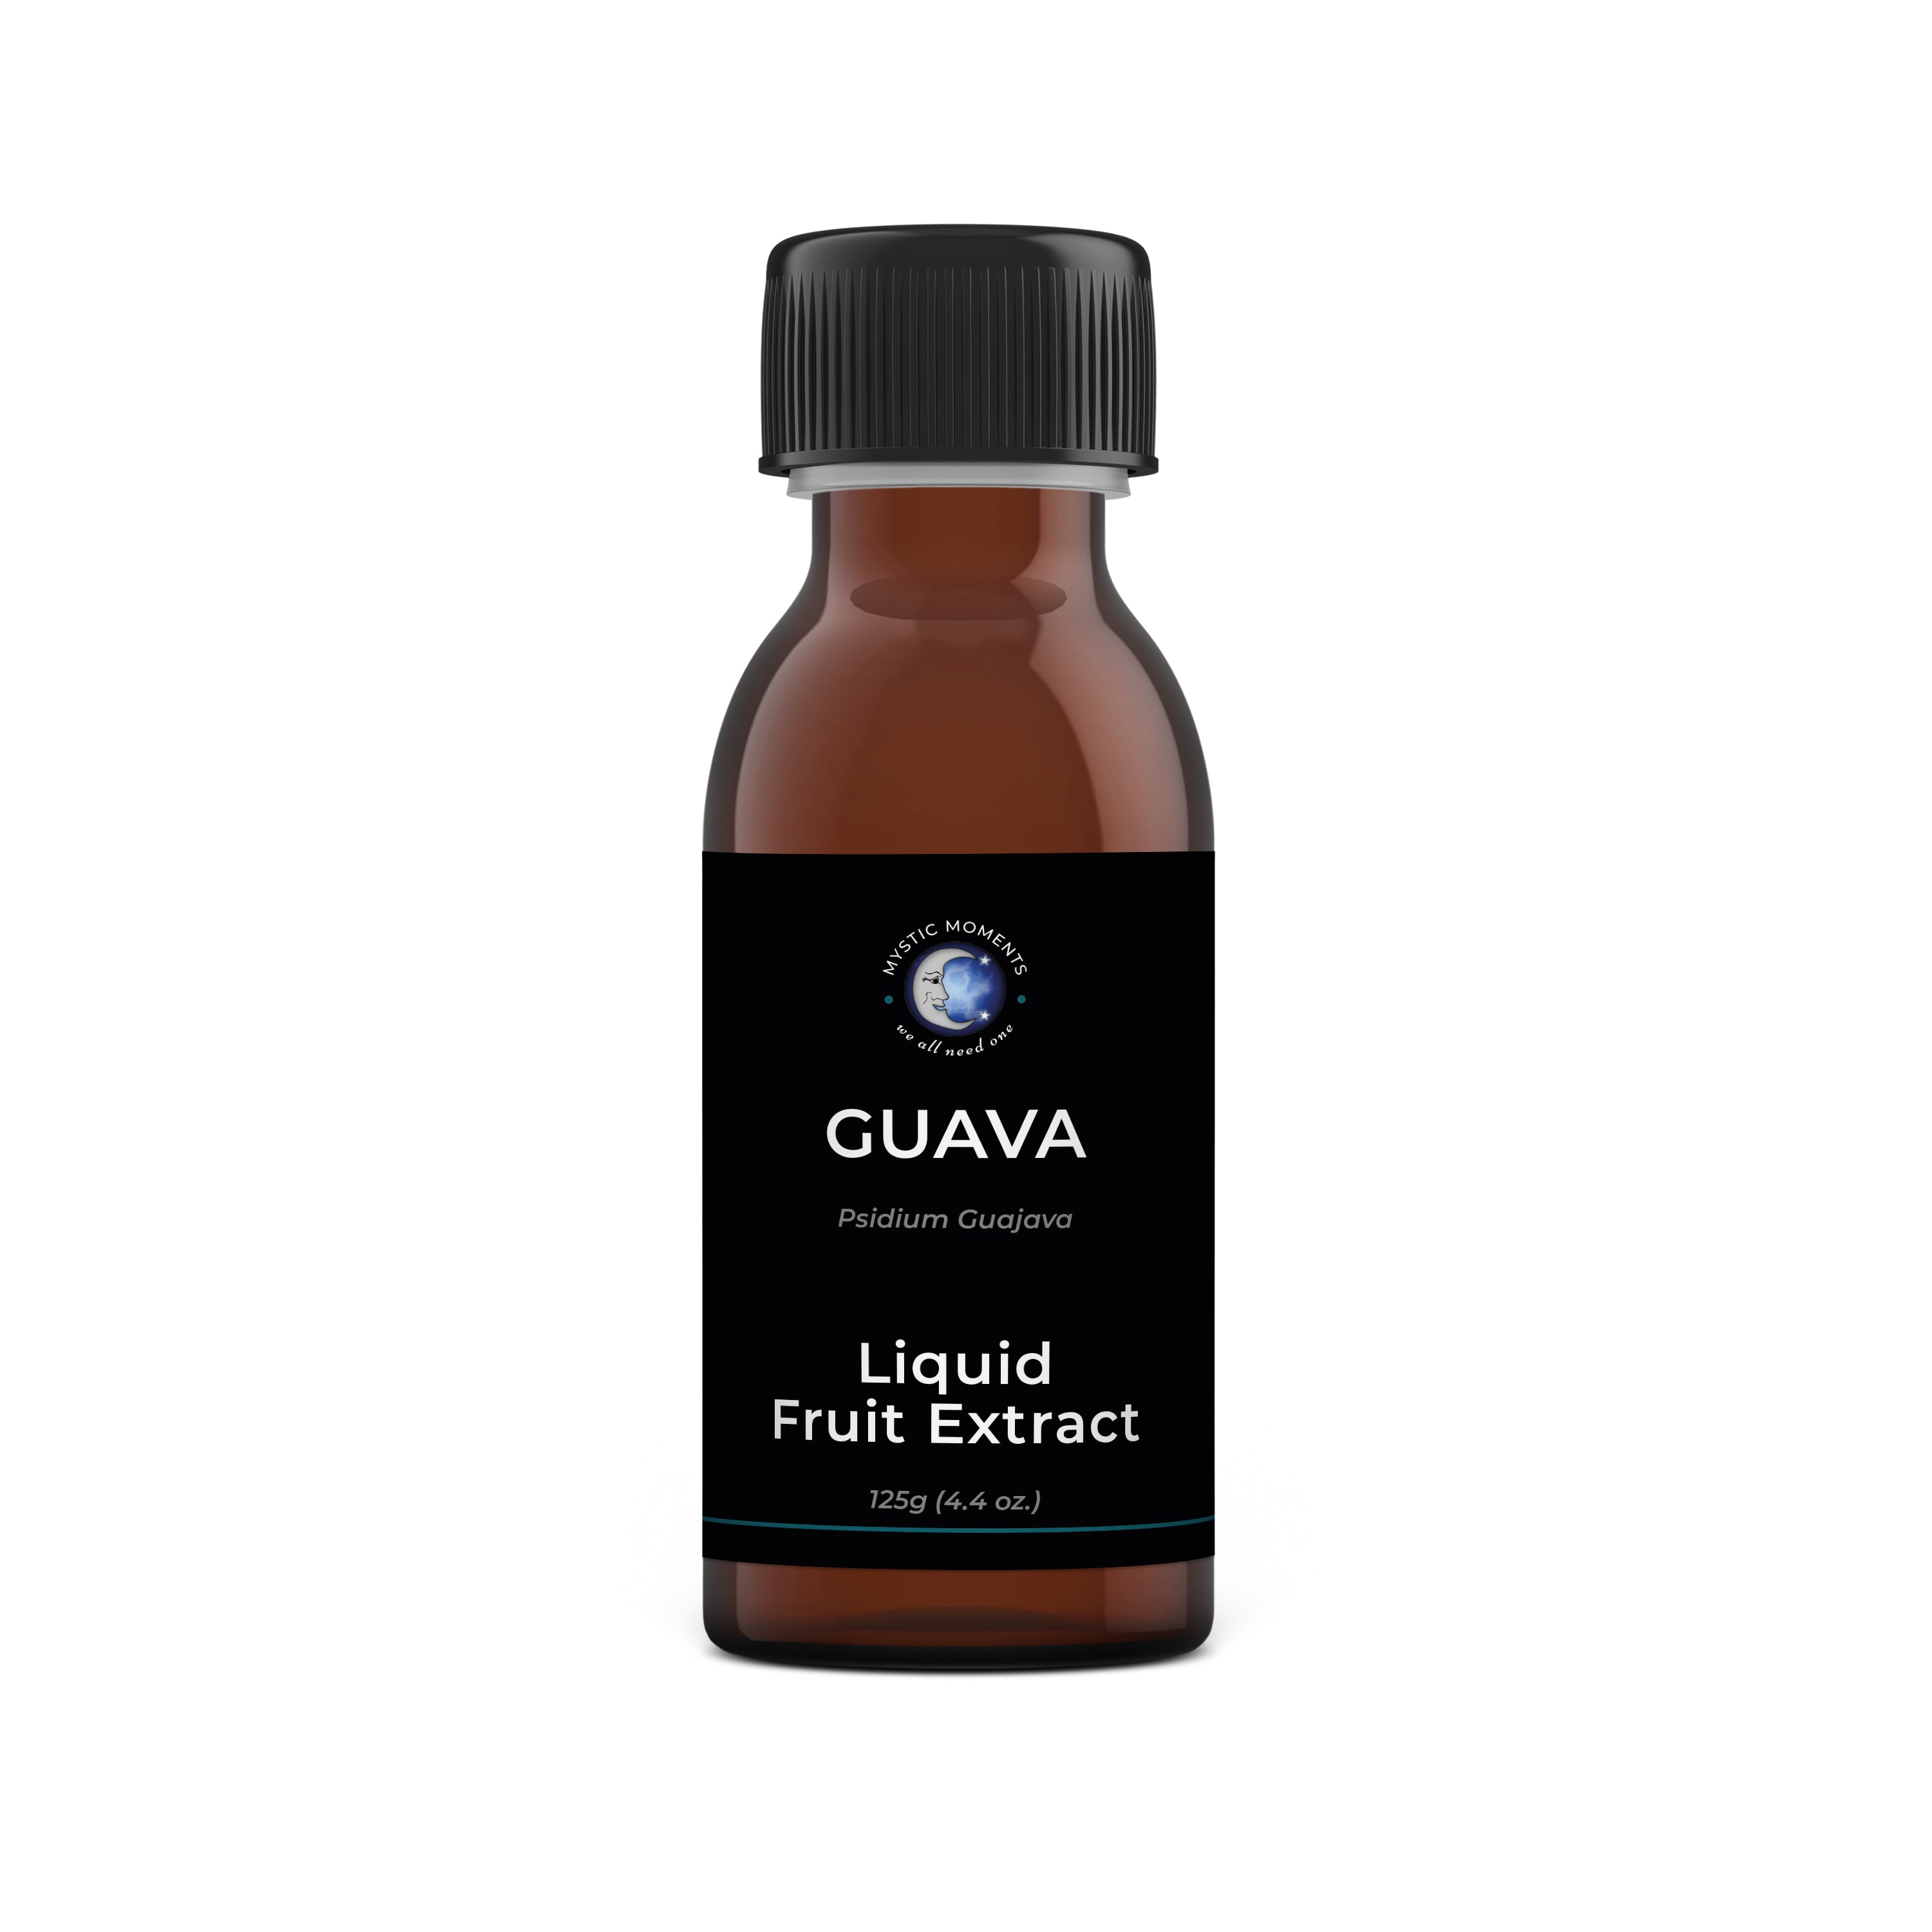 Guava Liquid Fruit Extract